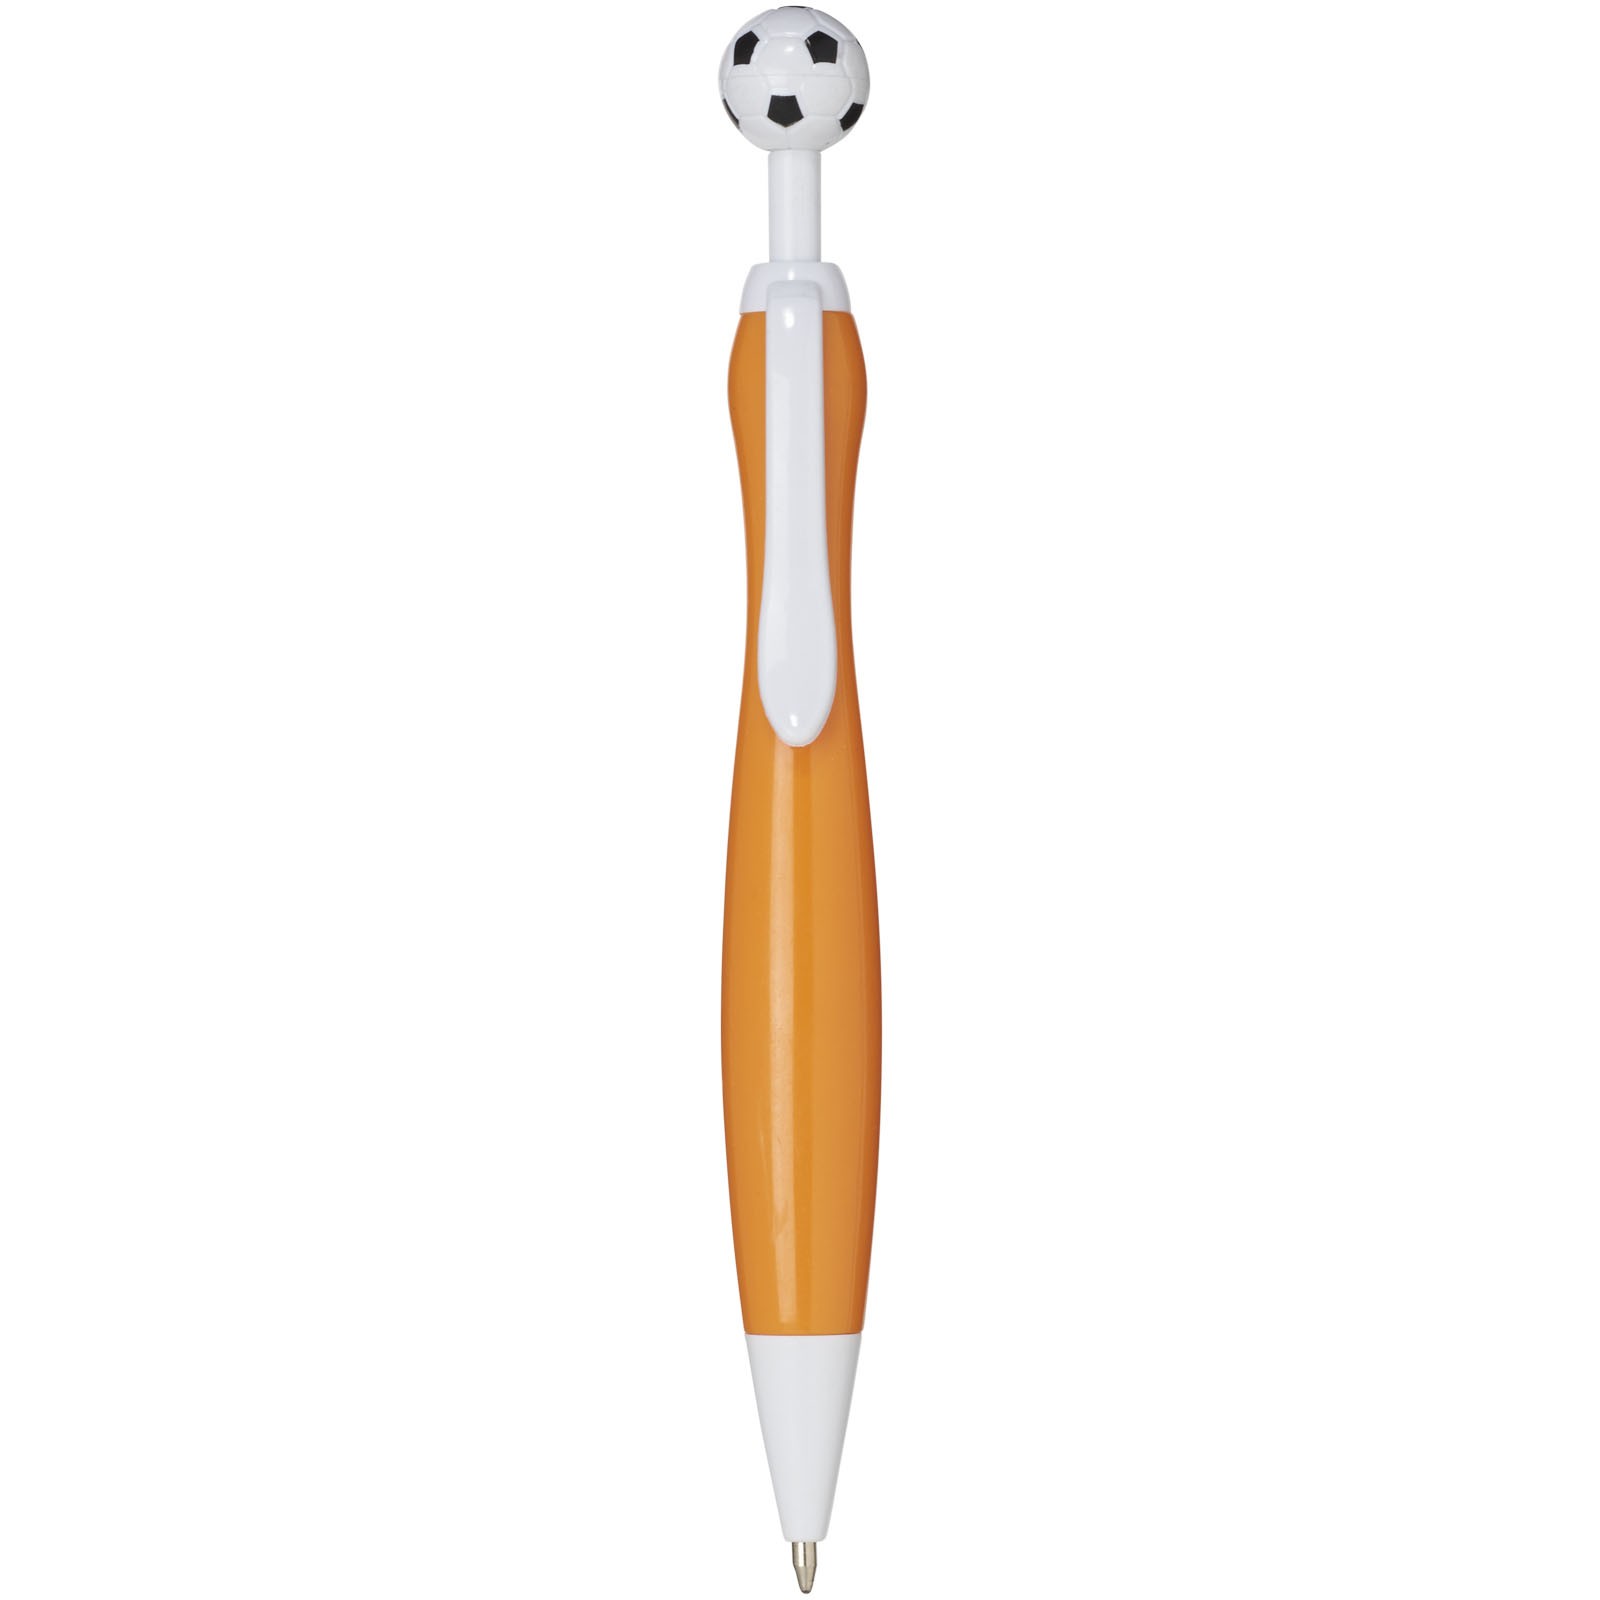 Naples ballpoint pen with football-shaped clicker - Orange